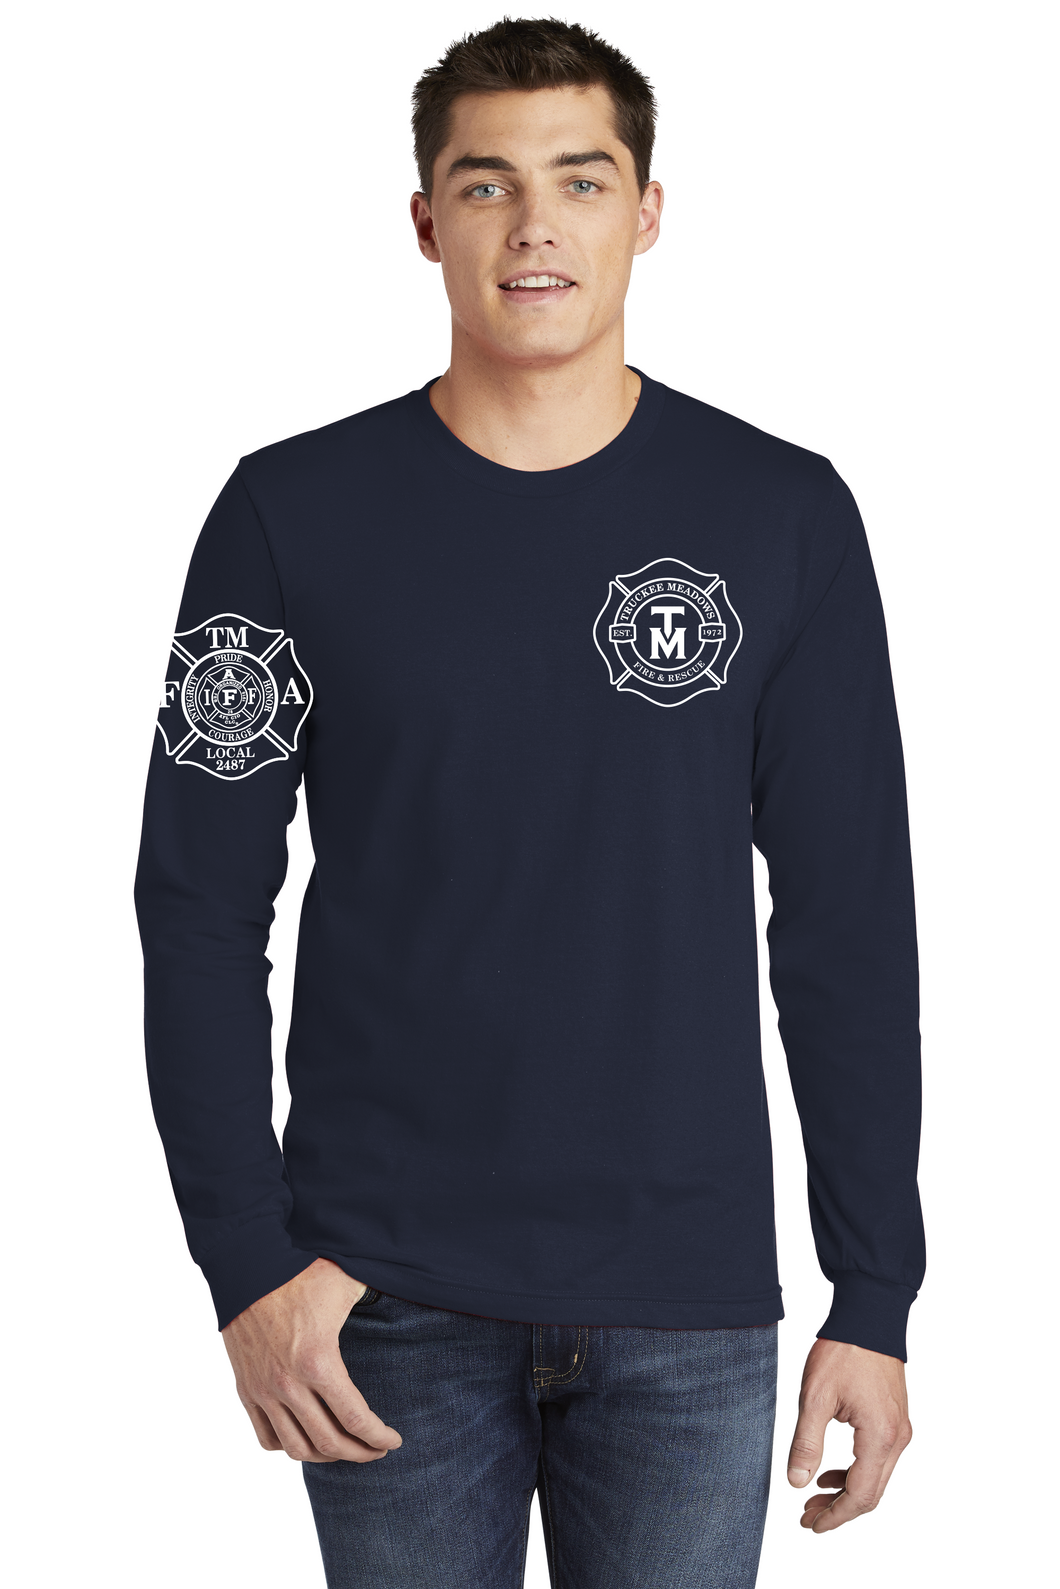 Truckee Meadows 100% American Apperal long sleeve duty Duty Shirt